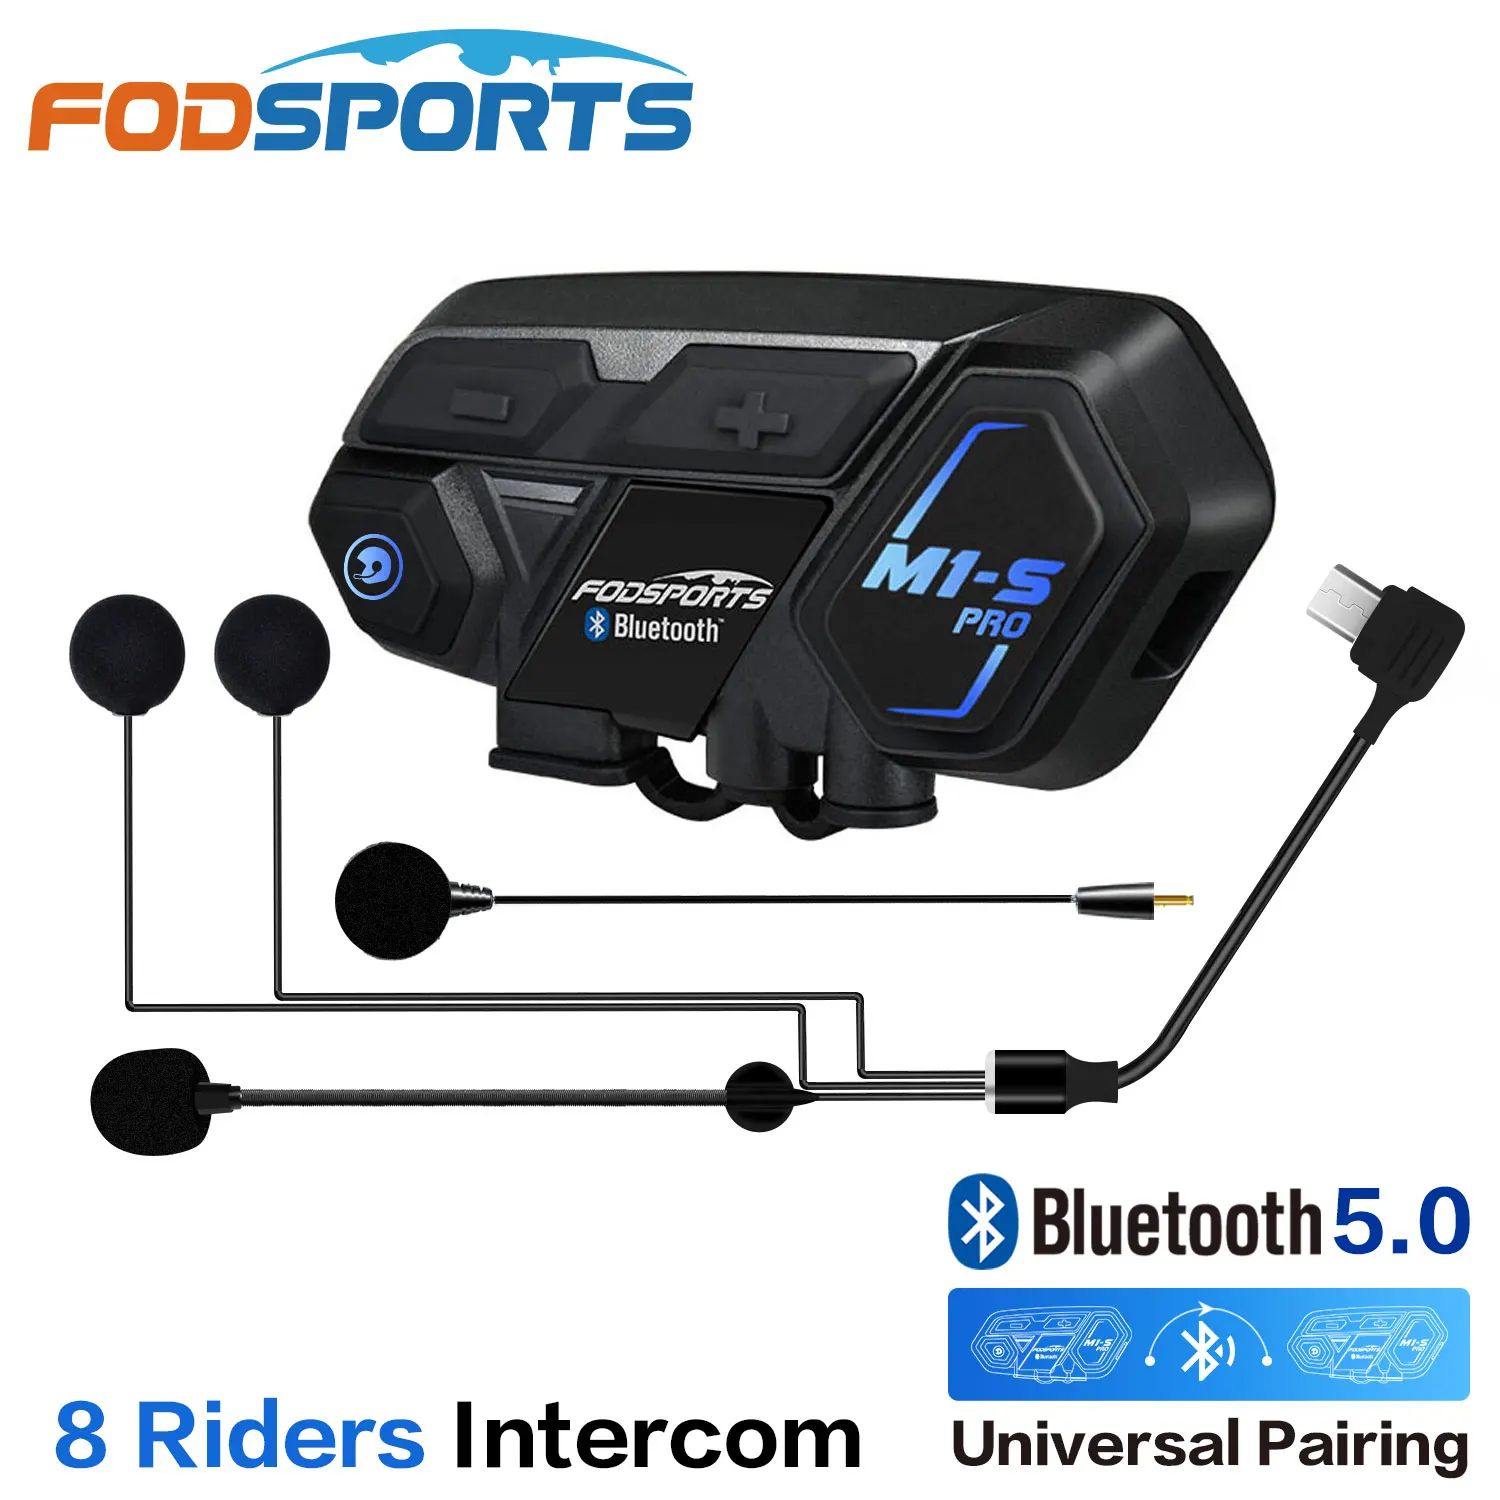 Fodsports M1-S Pro Motorcycle Bluetooth Helmet Headset for 8 Riders Intercom Motorcycle intercomunicador moto блютуз гарнитура